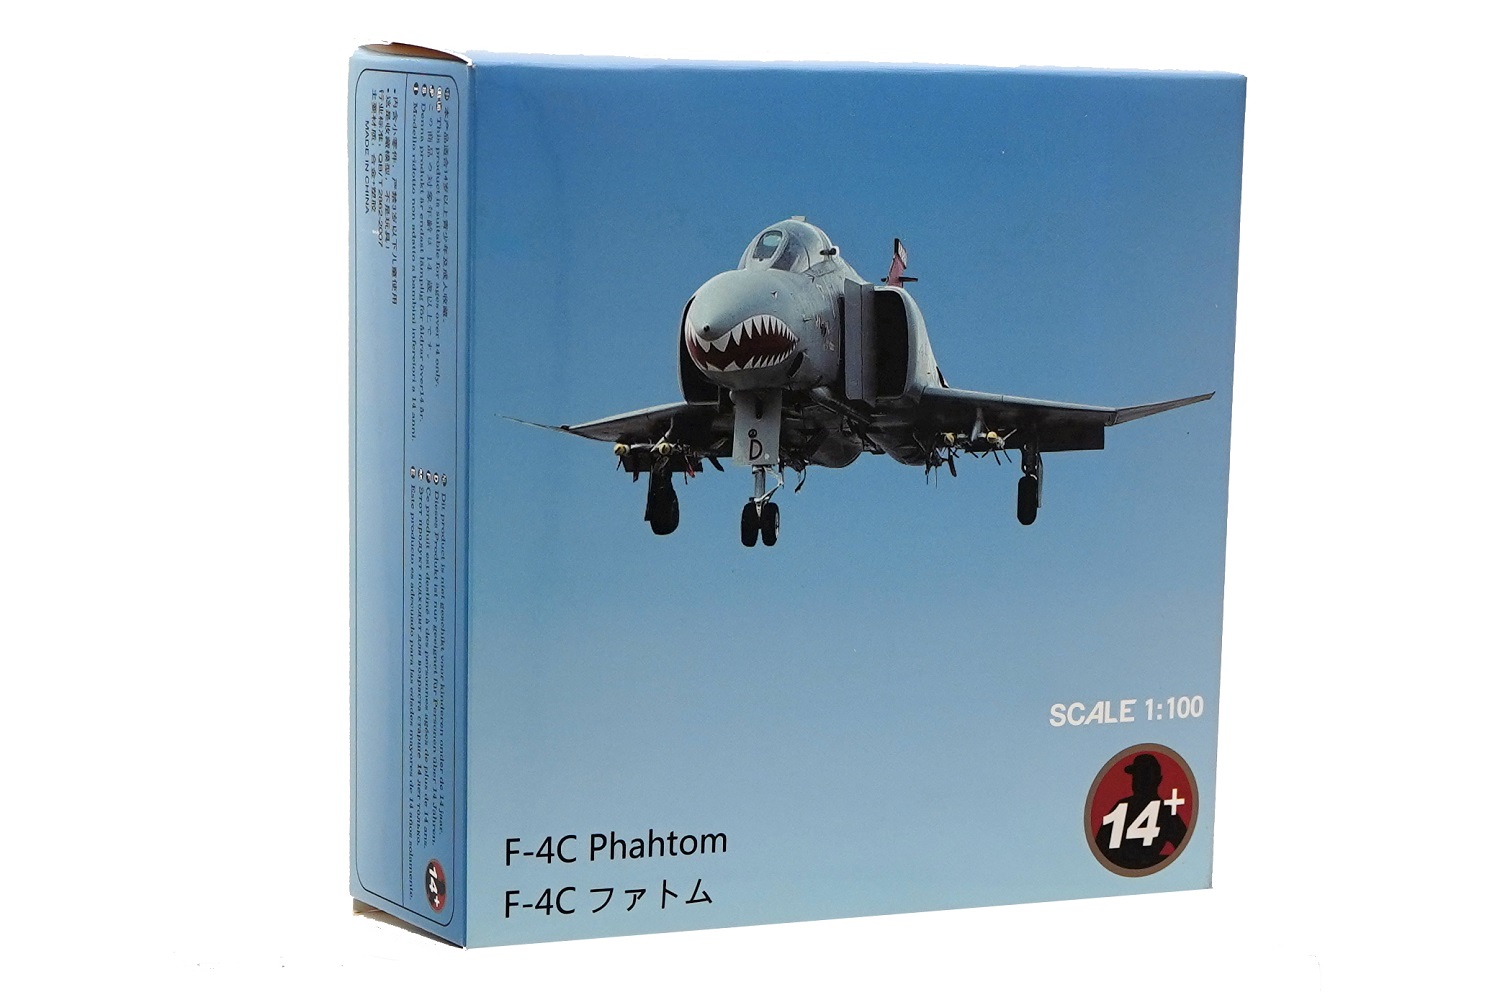   F-4C FHANTOM. # 13 hobbyplus.ru